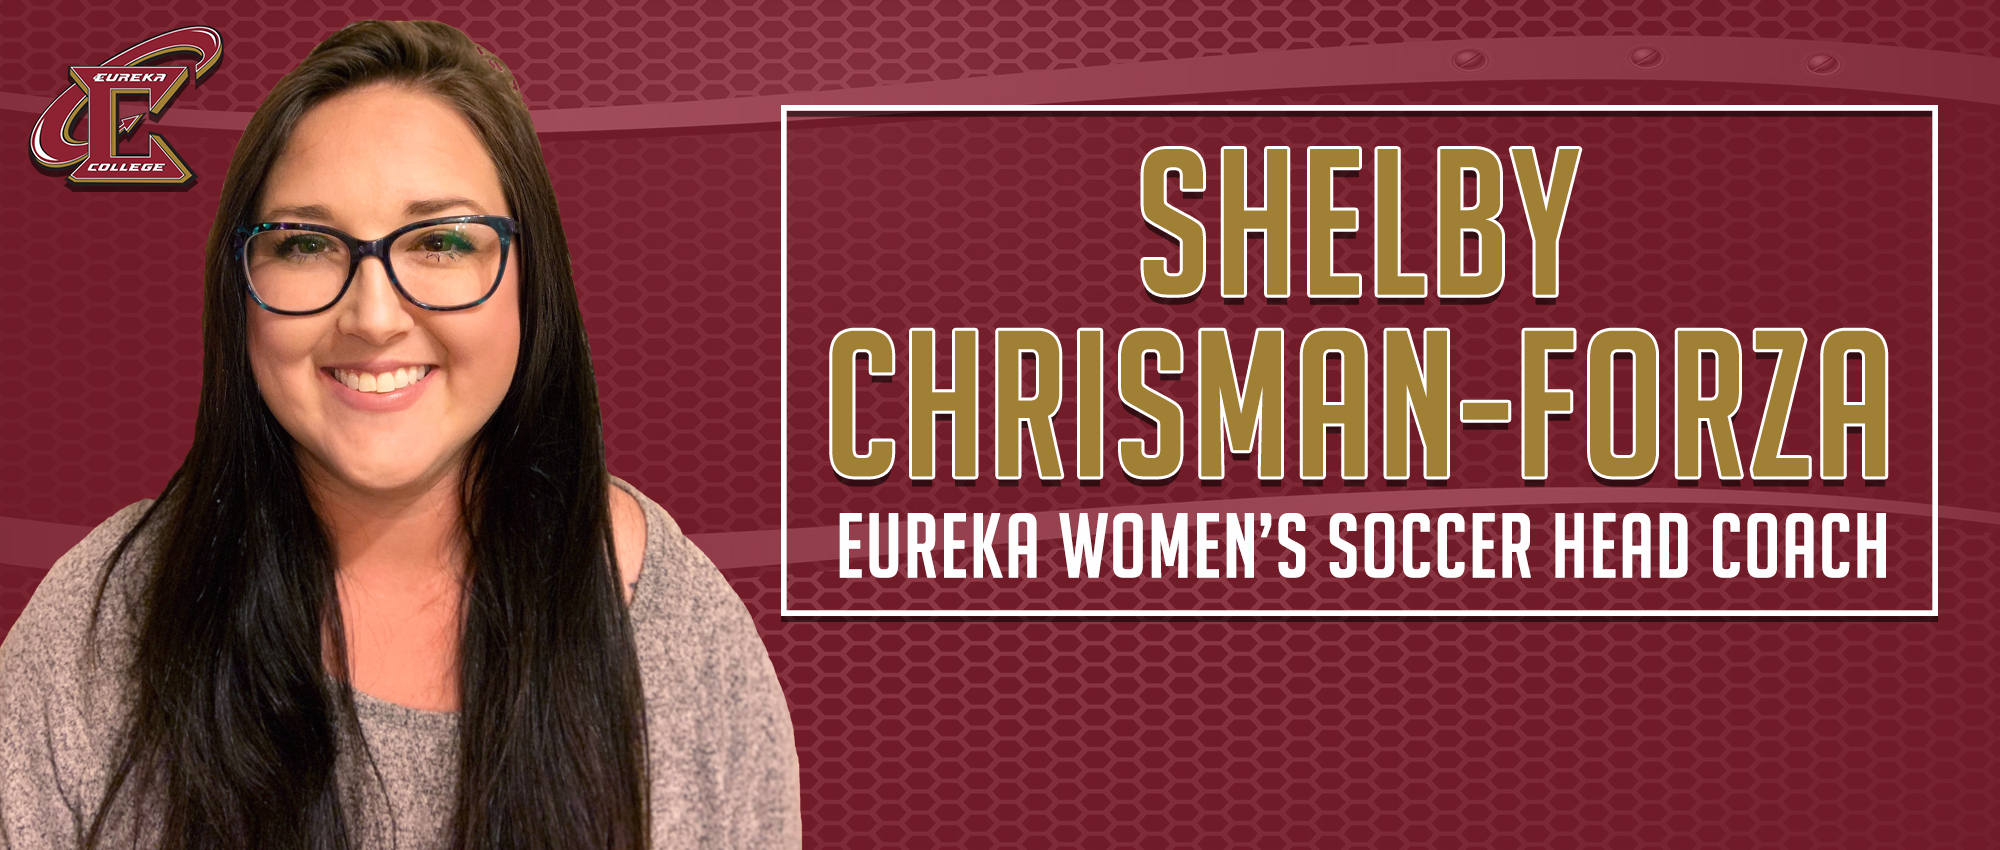 Shelby Chrisman-Forza Named Eureka College Women’s Soccer Head Coach